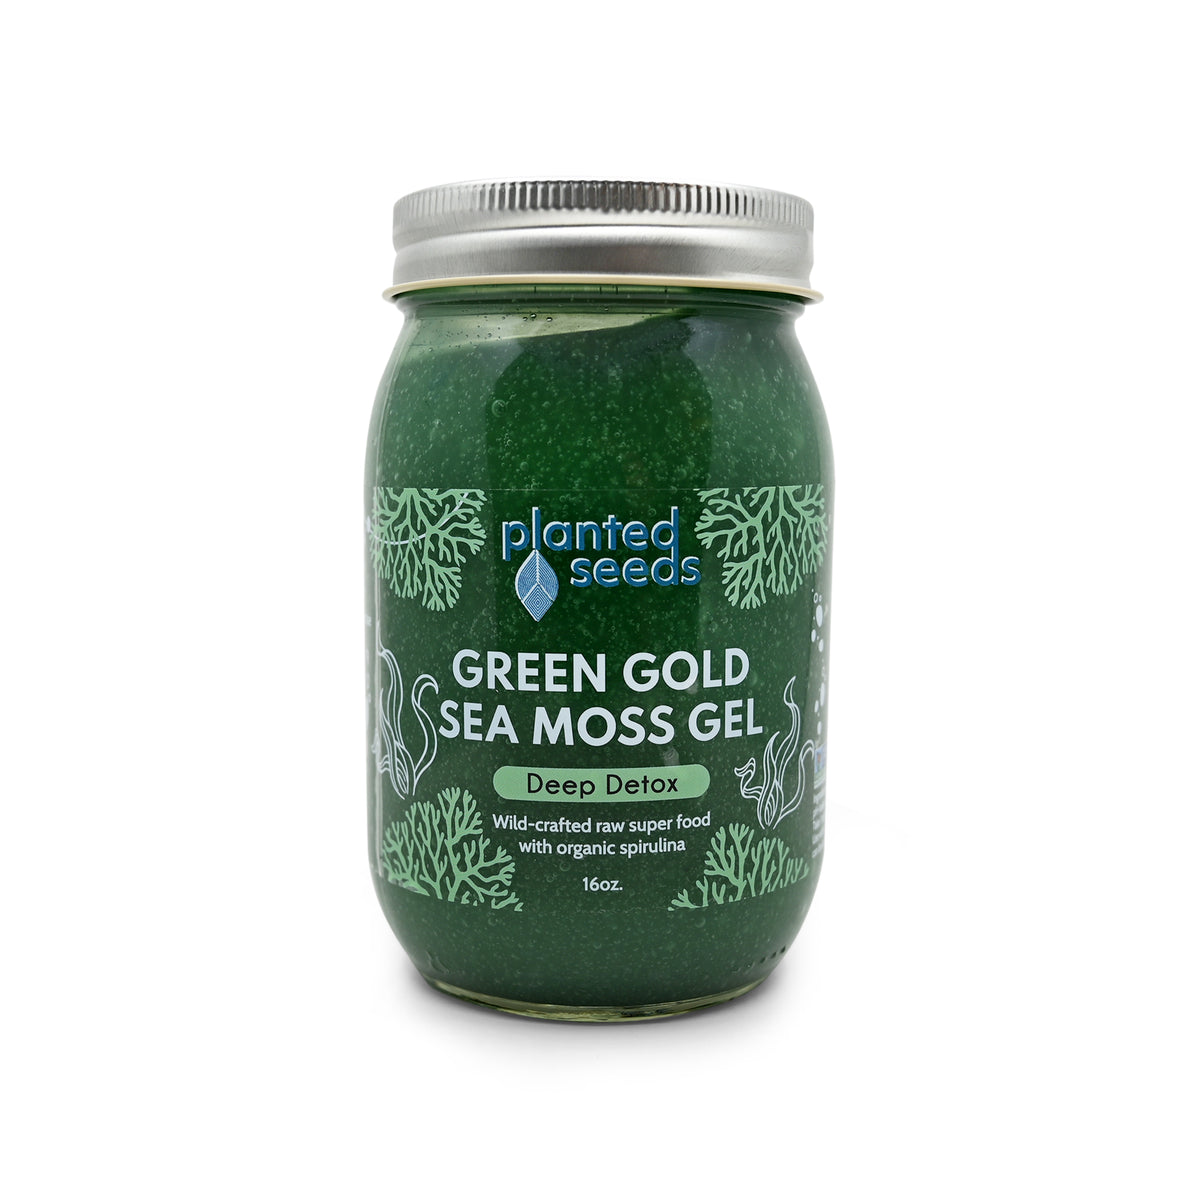 Green Gold Sea Moss Gel - 16oz Jar